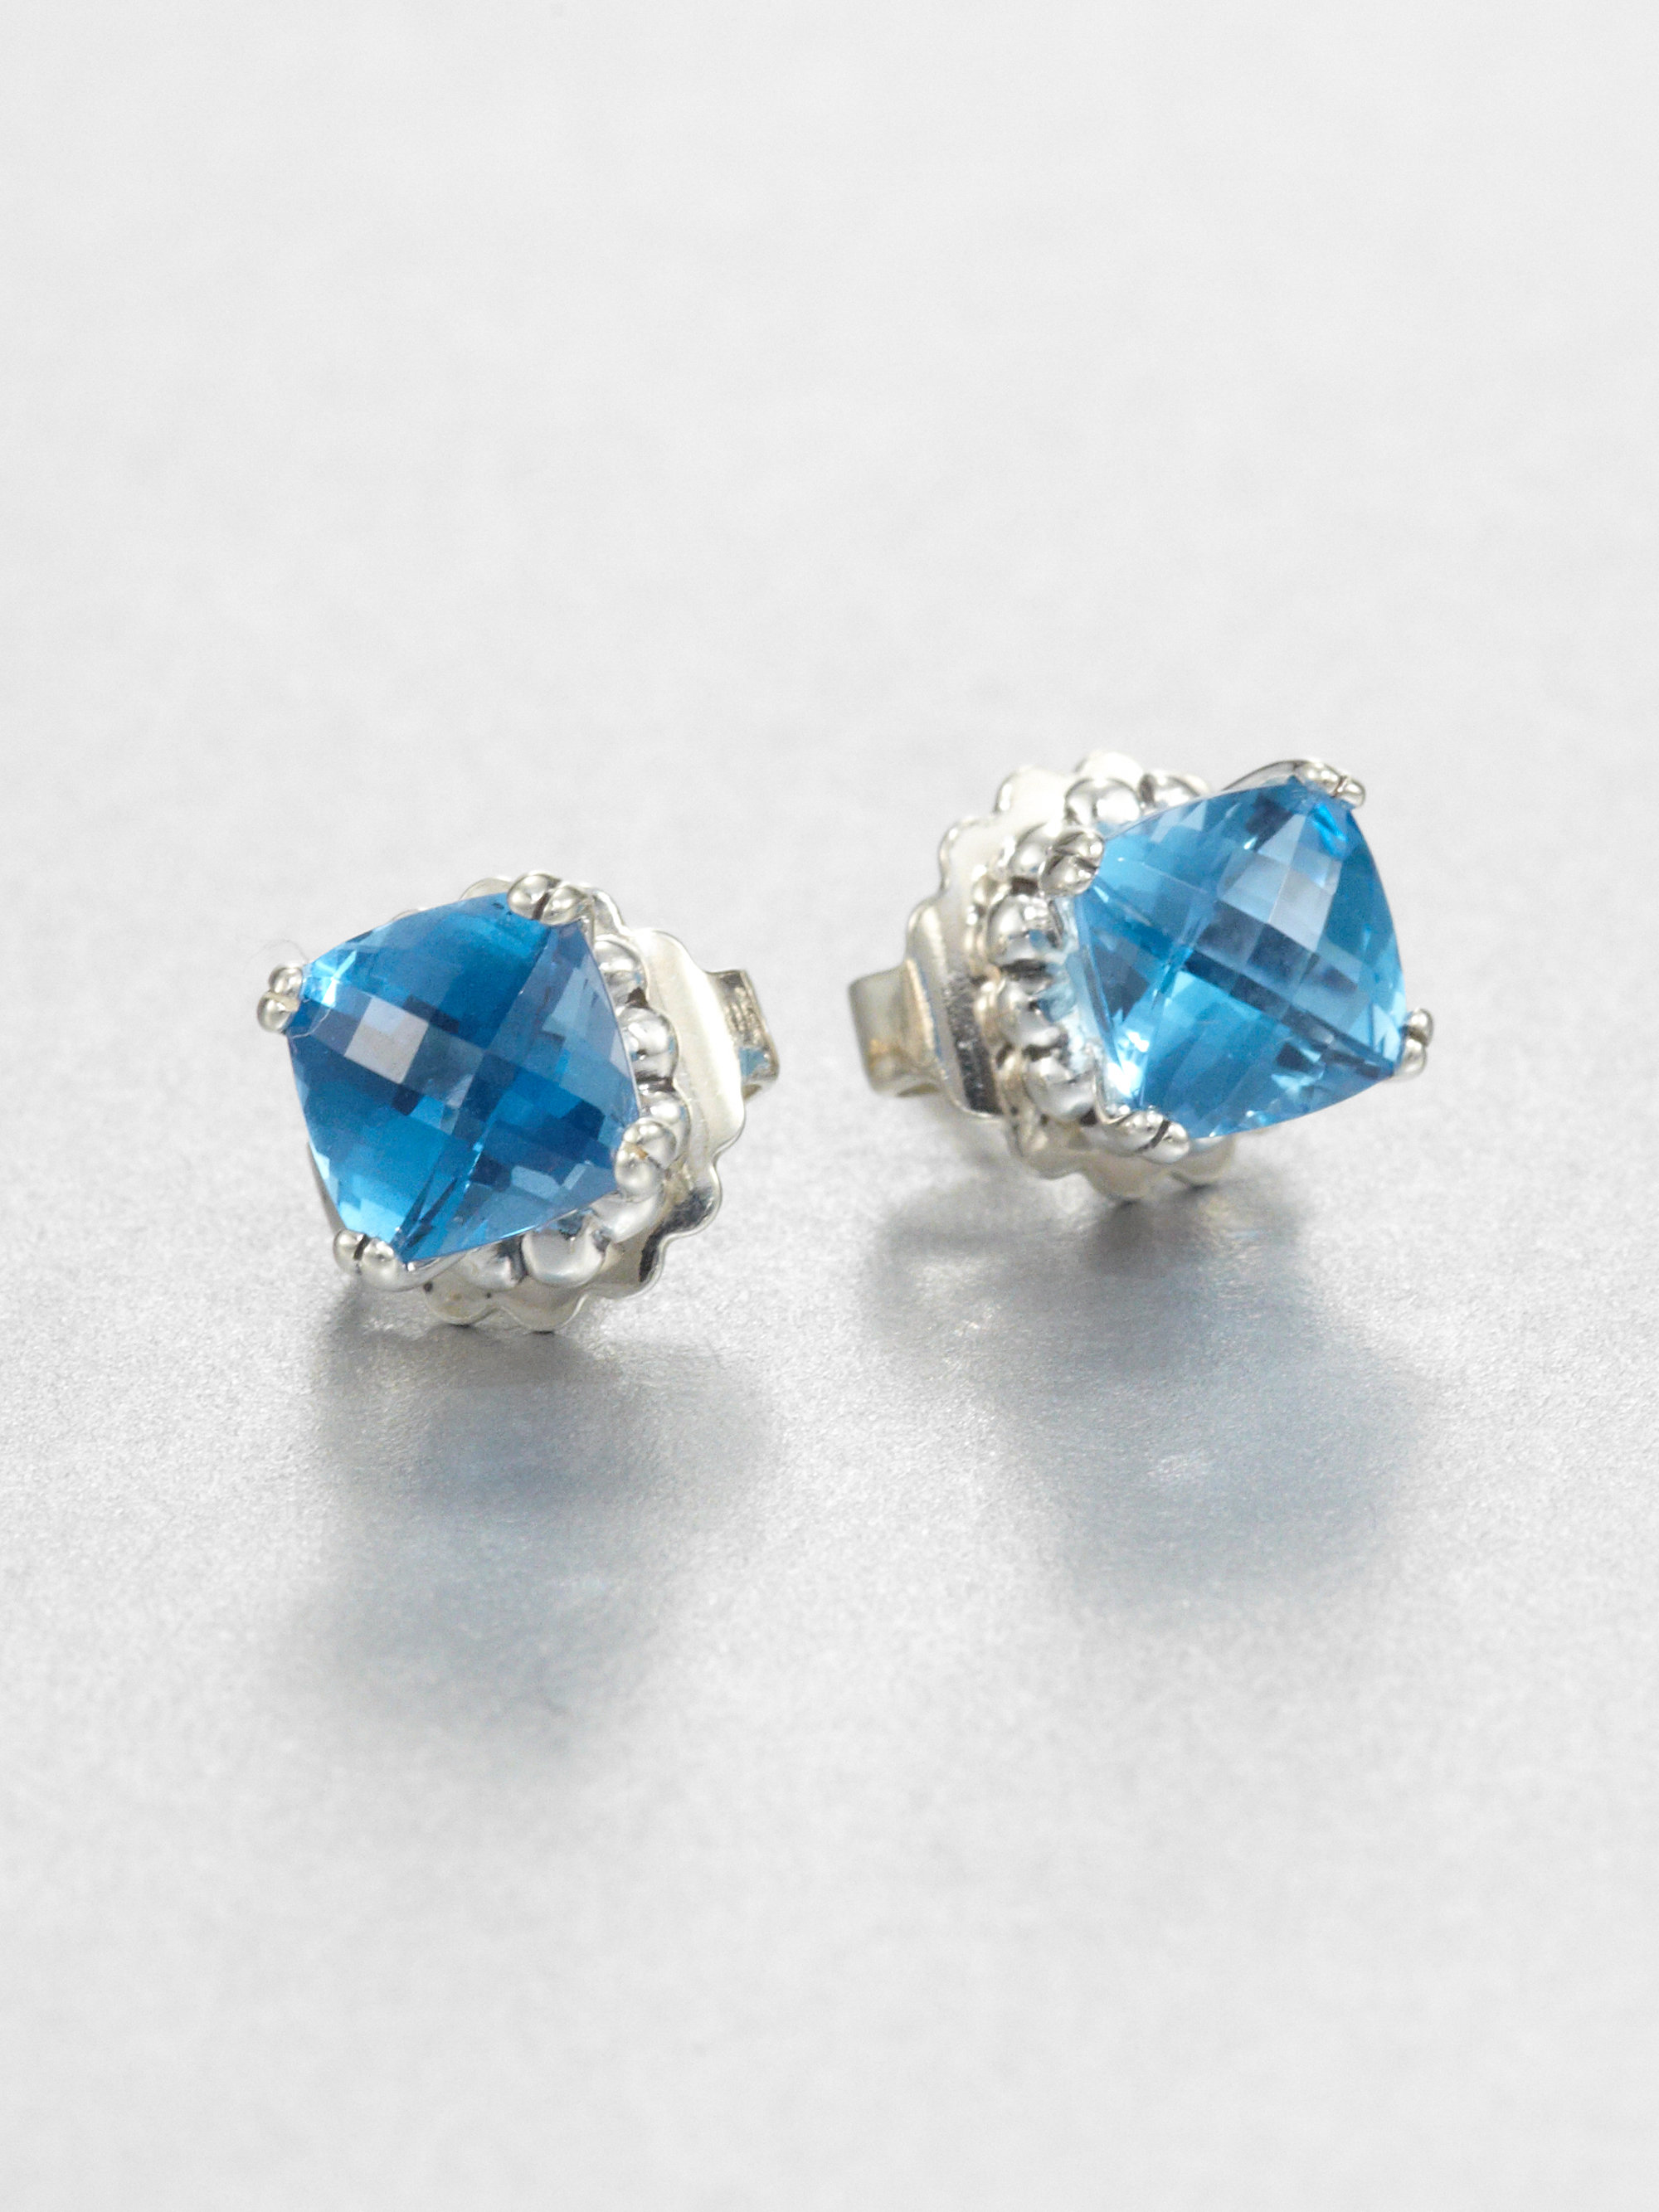 Lyst - Lagos Blue Topaz and Sterling Silver Stud Earrings in Metallic